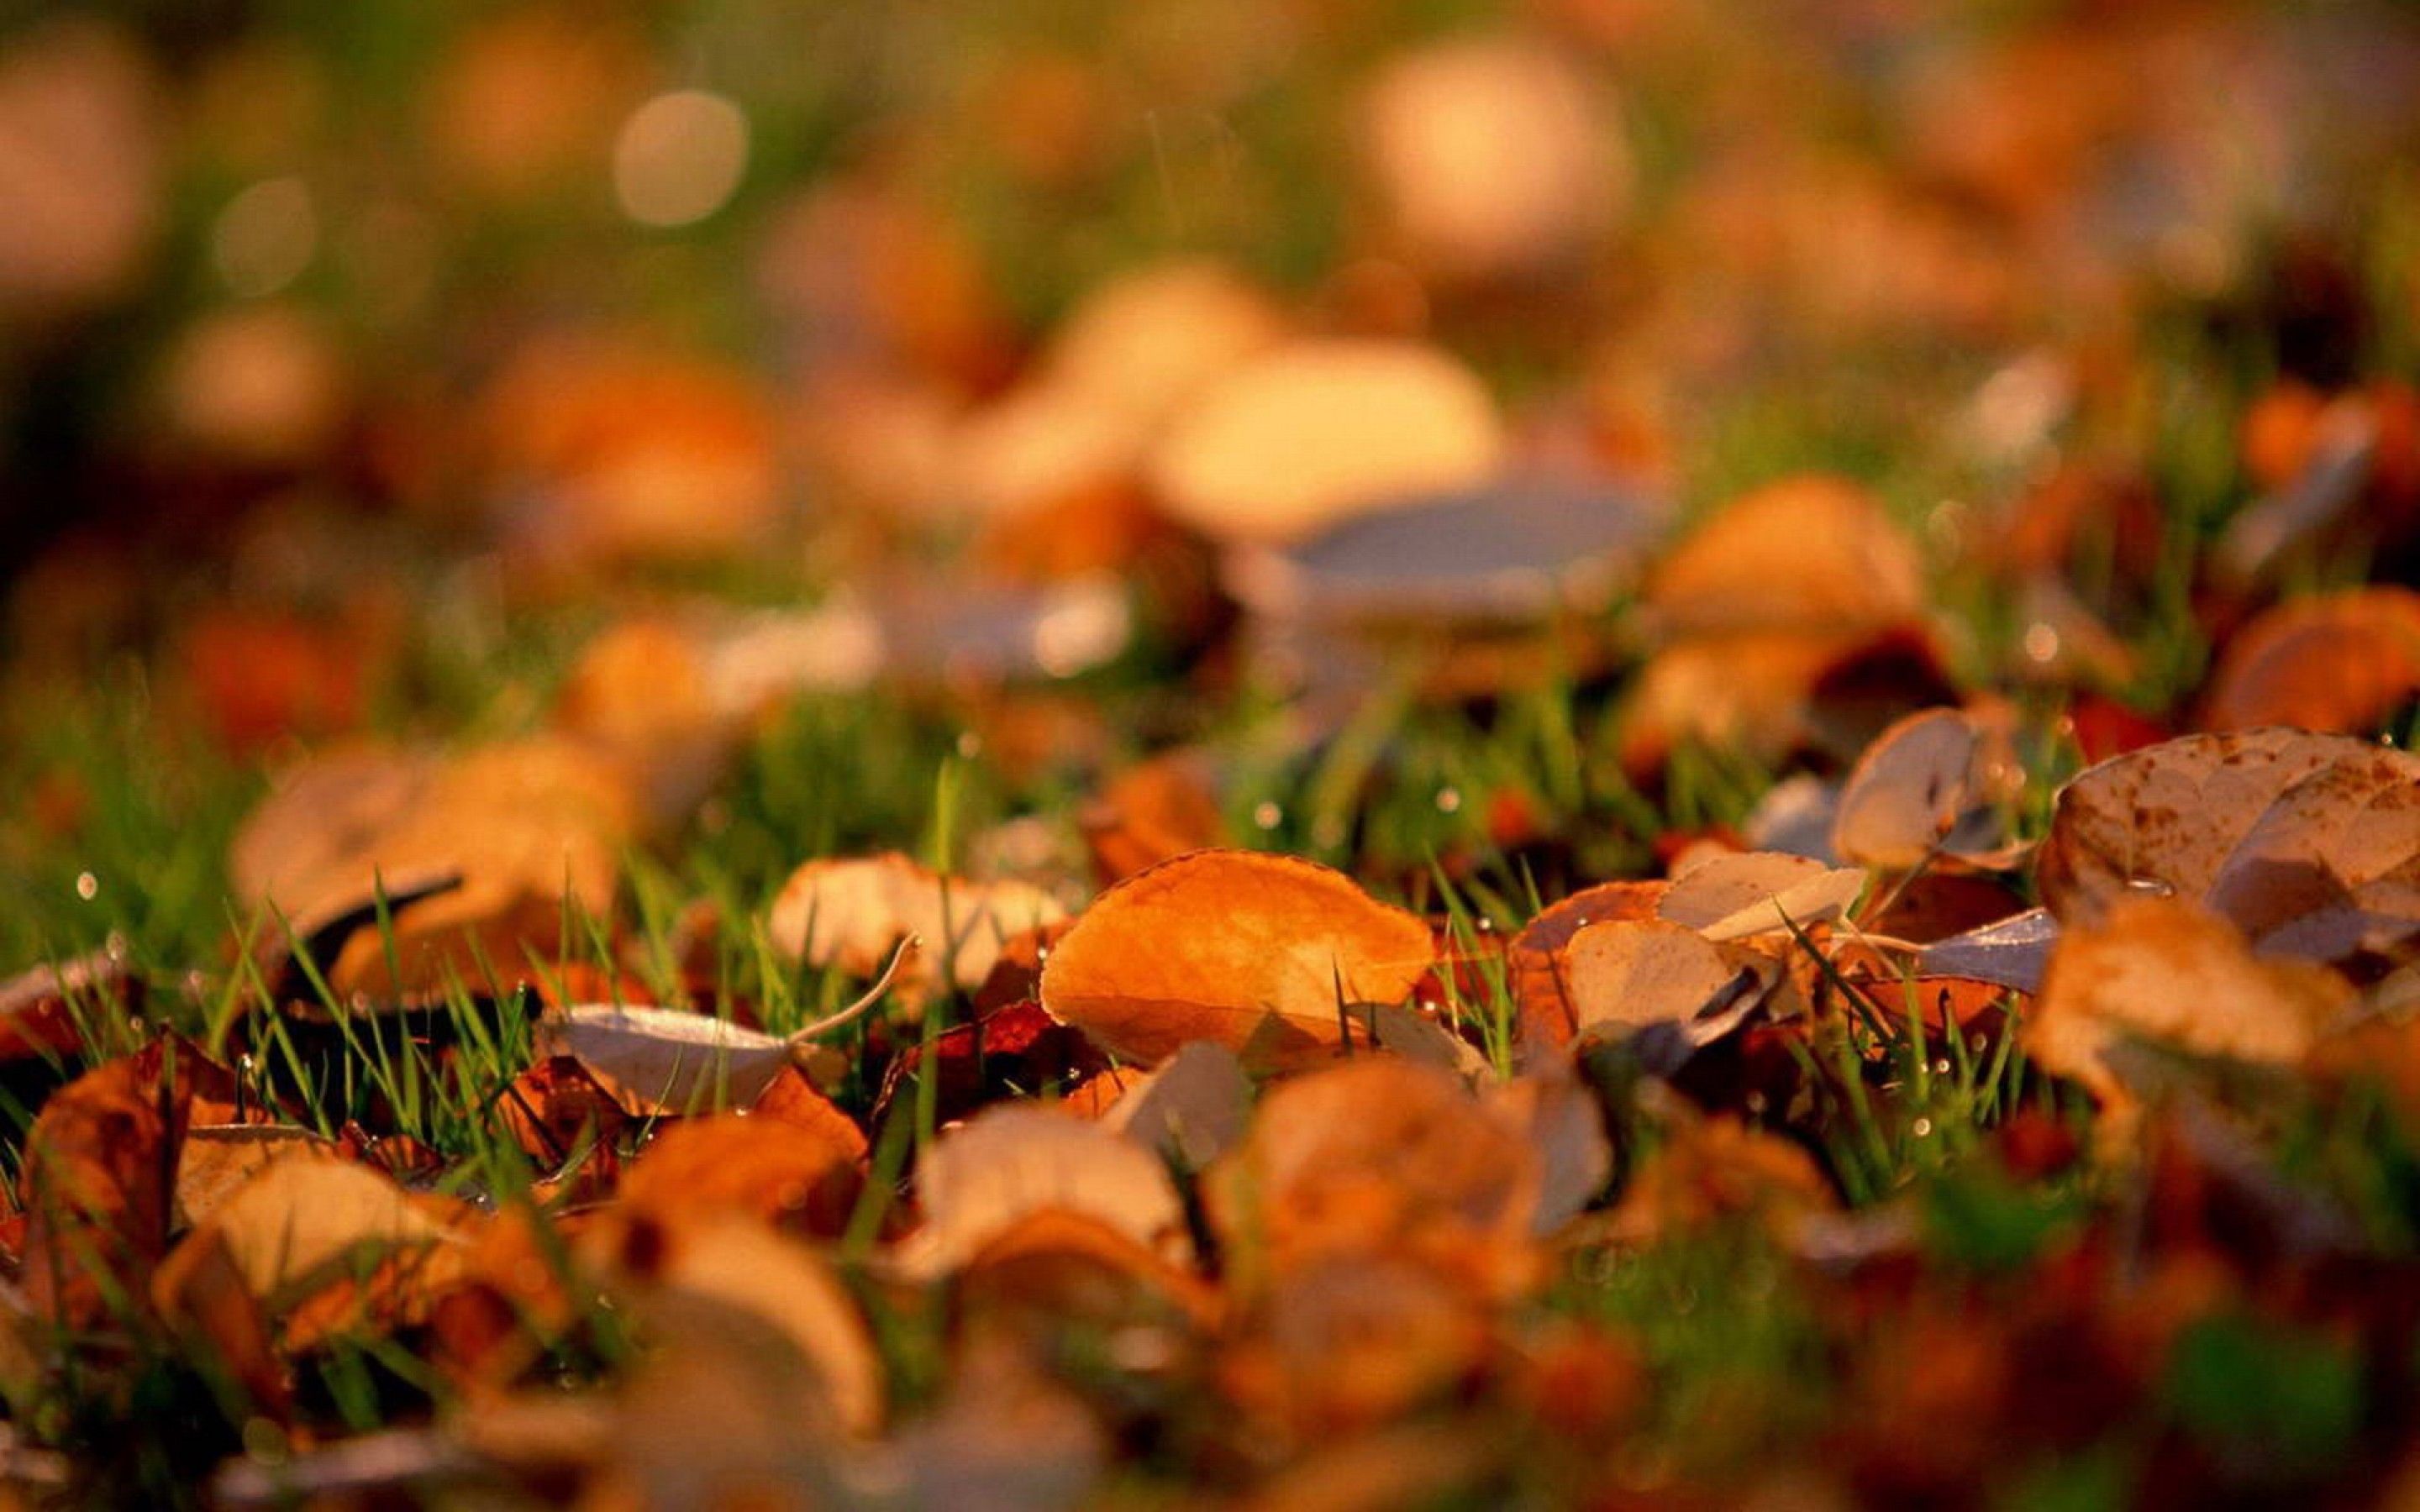 Autumn Leaves Retina MacBook Pro Wallpaper. Autumn leaves wallpaper, Autumn nature, Fall color trees